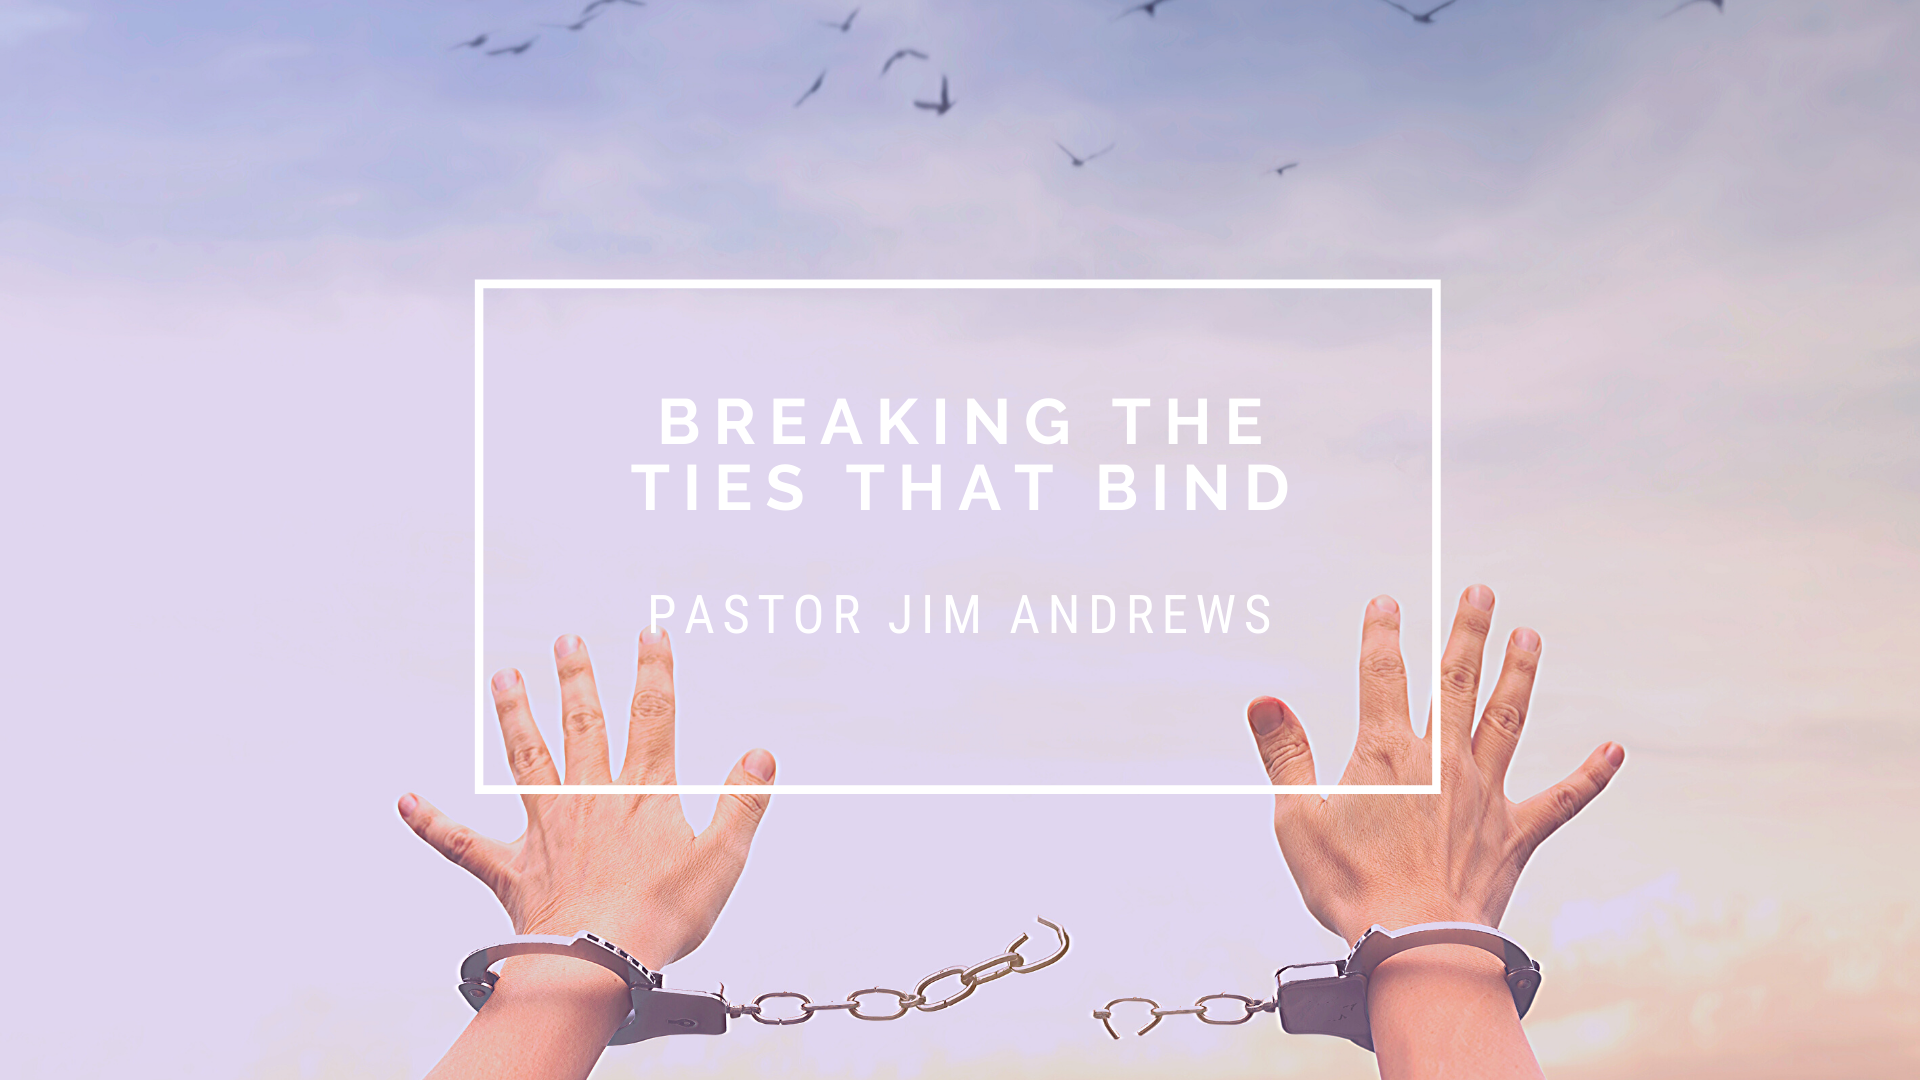 Breaking the Ties that Bind:  Control Your Environment – Genesis 39:1-12